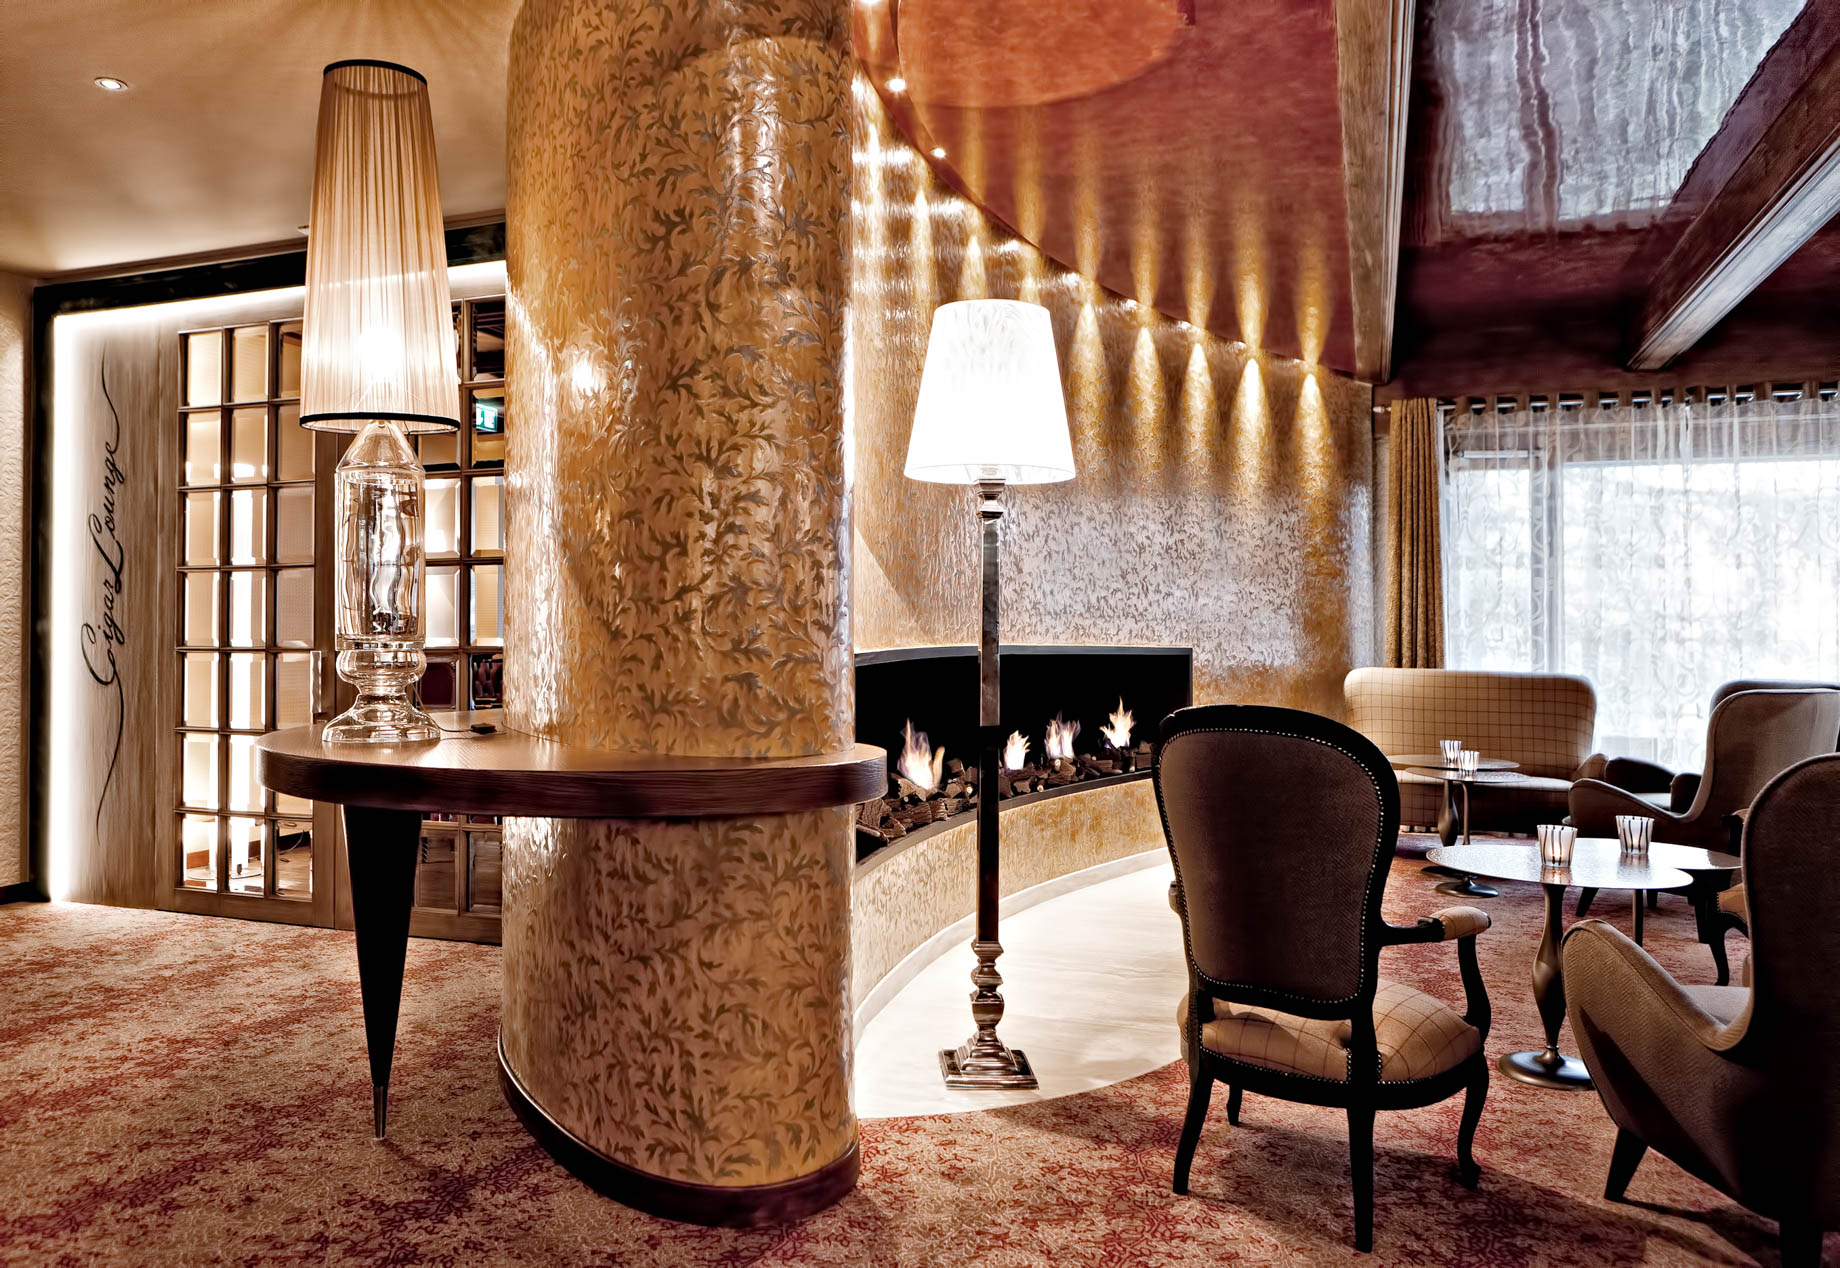 Tschuggen Grand Hotel - Arosa, Switzerland - Fireside Lounge